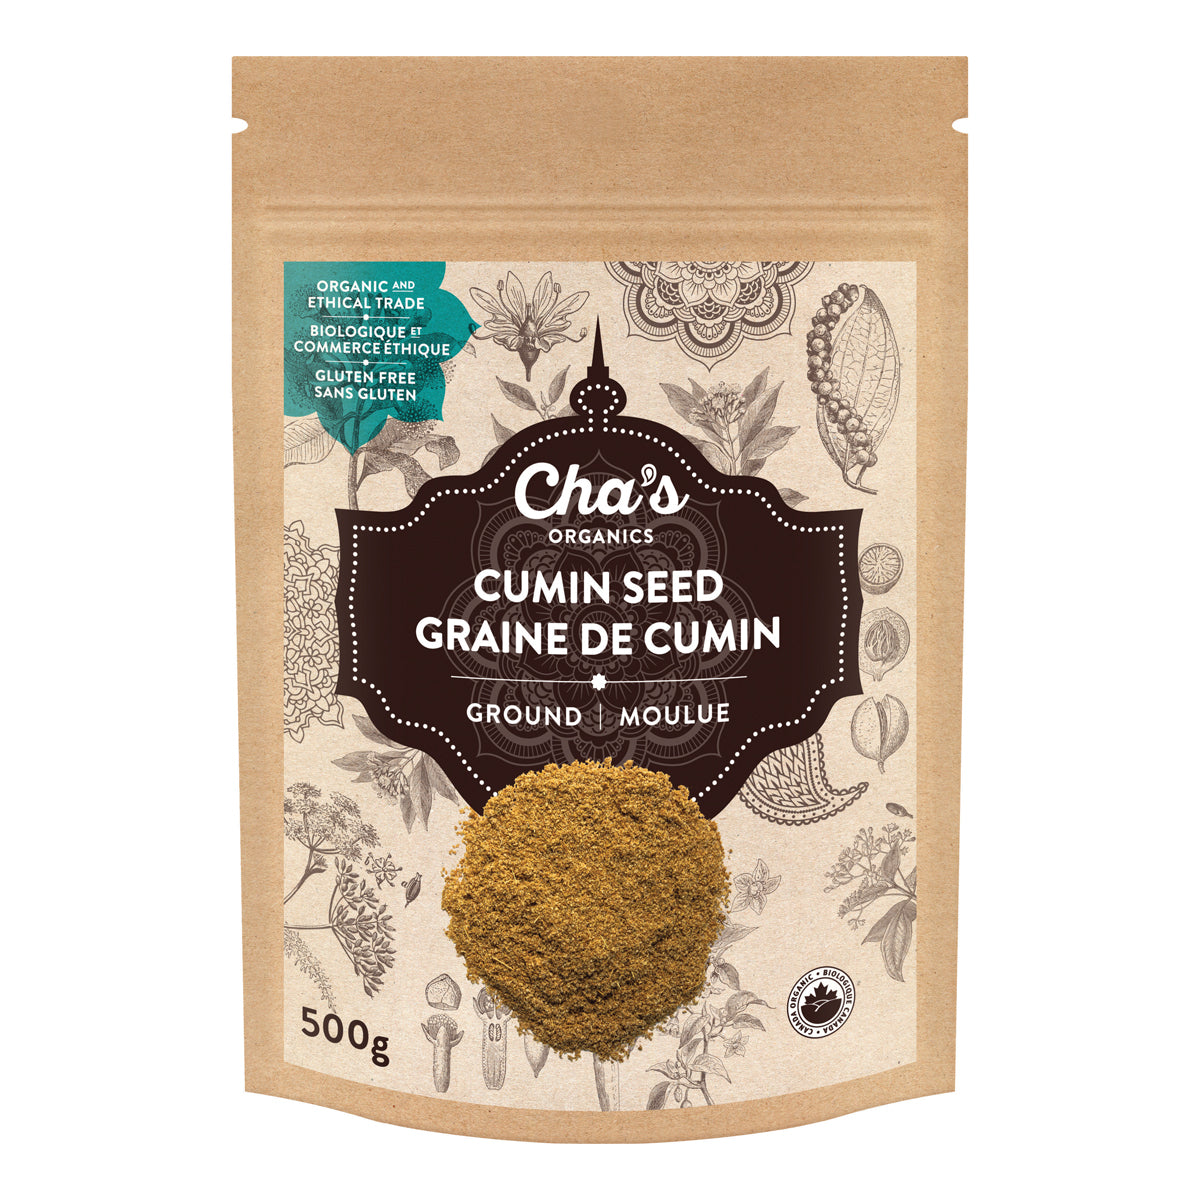 Chas Organics Cumin Seed Ground, 500g